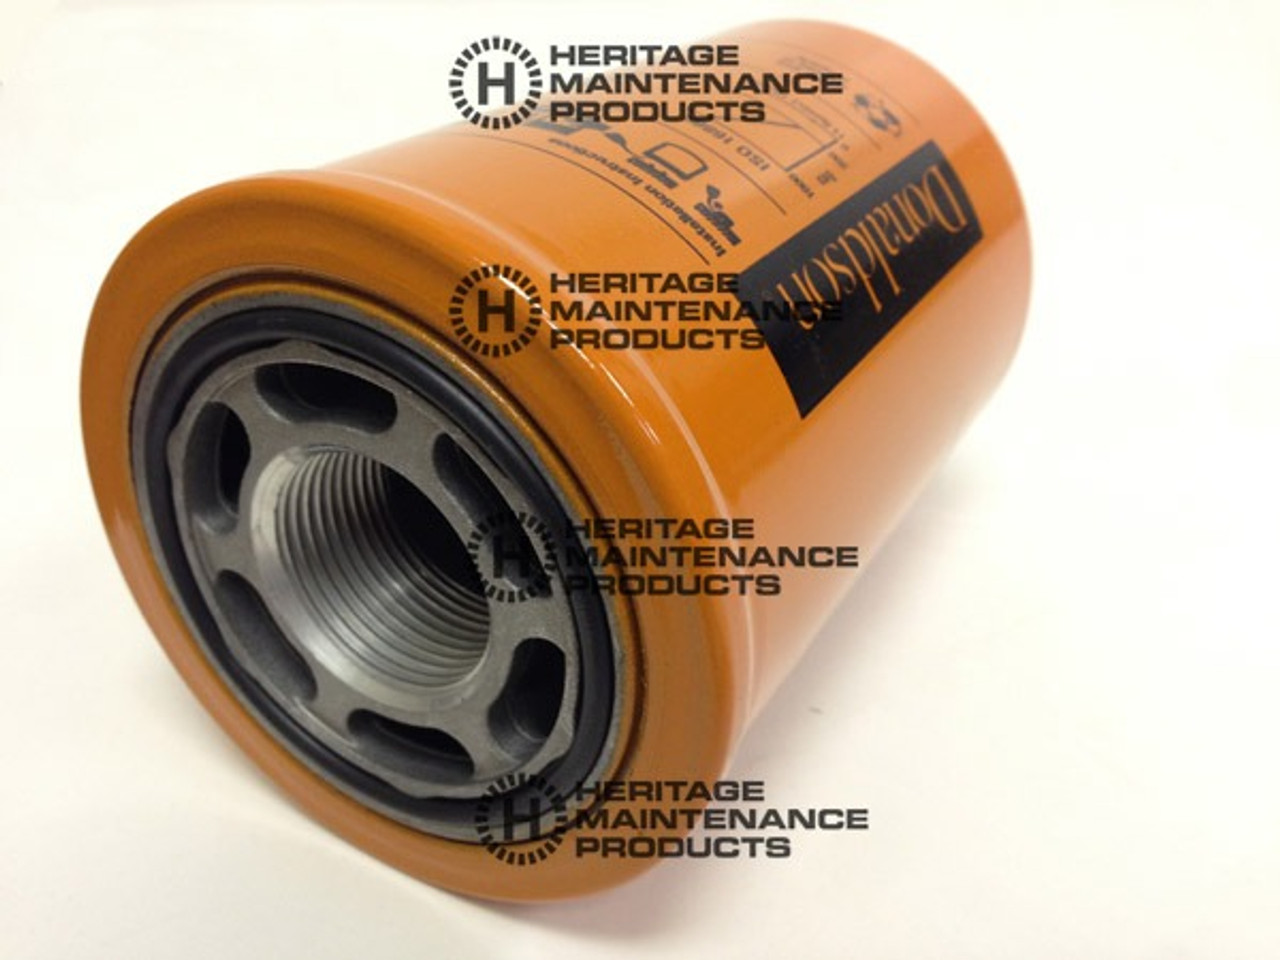 PB 3300359 Heavy Duty Spin-on Hydraulic Oil Filter for Minuteman Power Boss